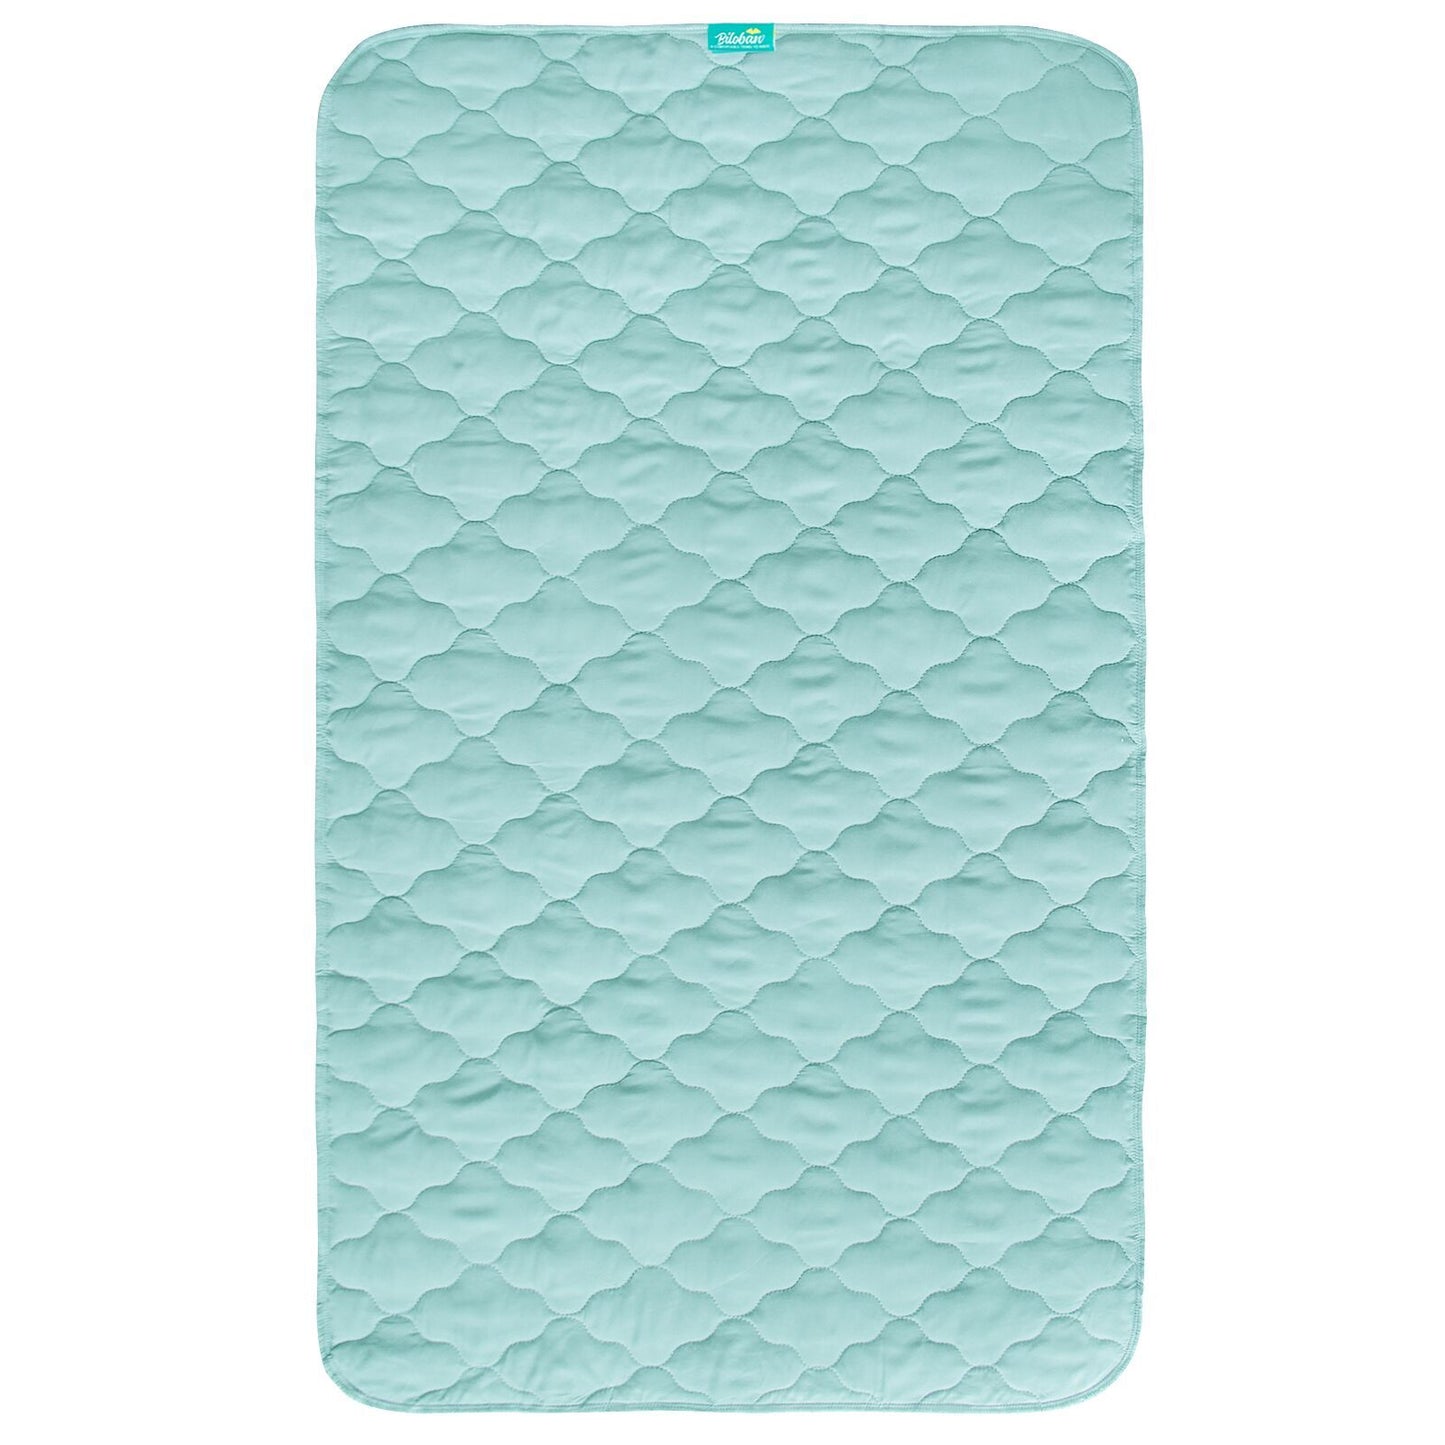 Waterproof Crib Mattress Protector Pad | Bed Pad Mat - 52" x 28", Anti Slip & Durable, Aqua - Biloban Online Store